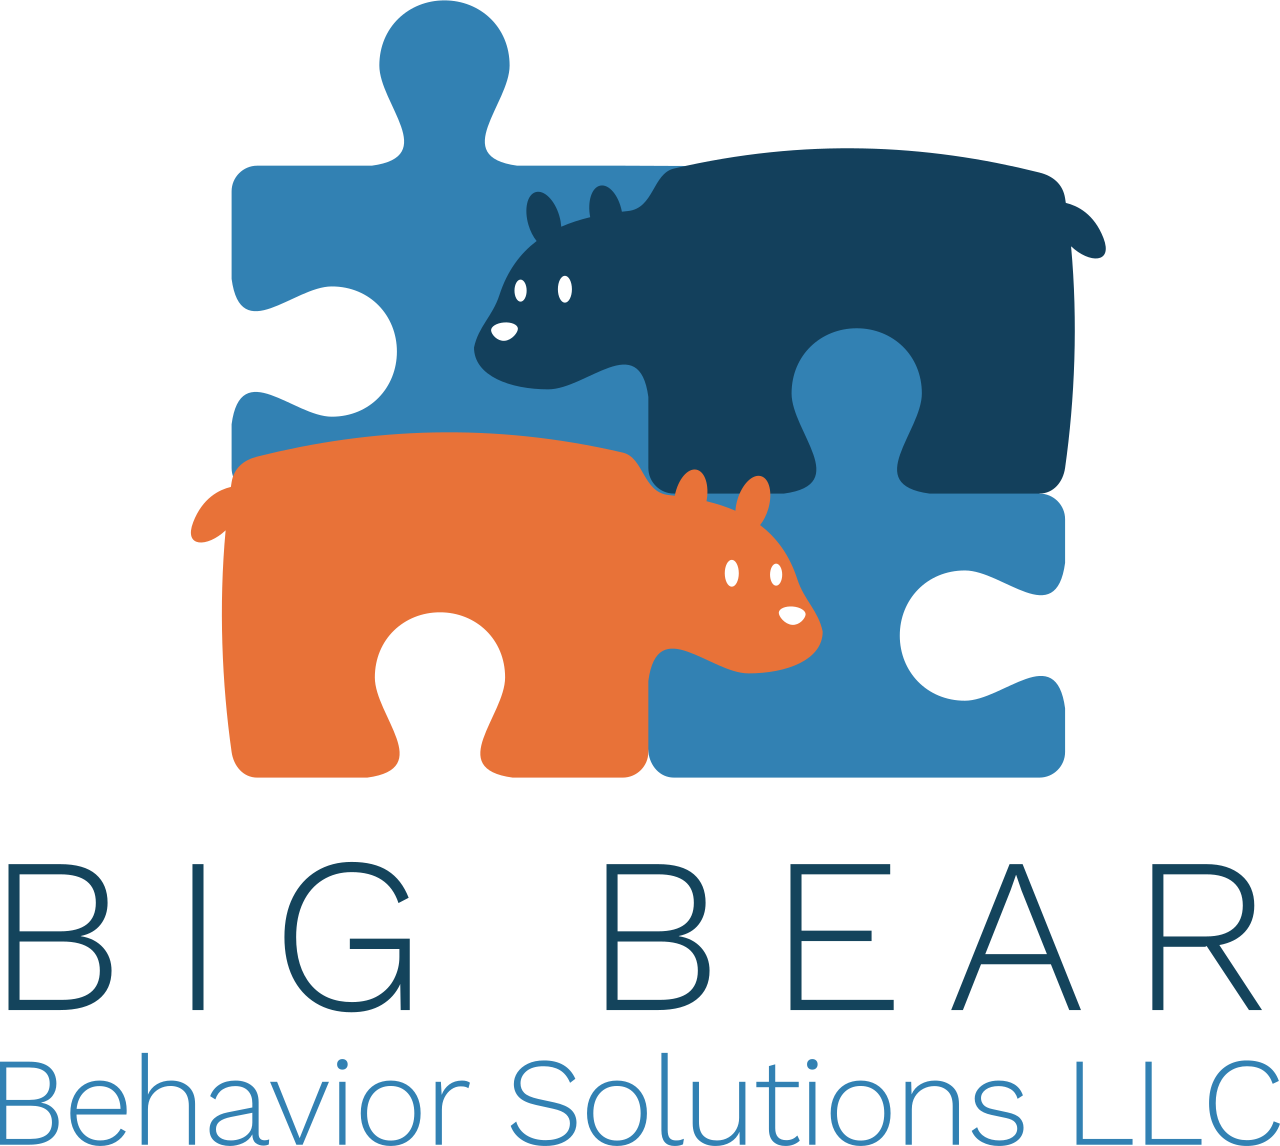 Big Bear 's logo